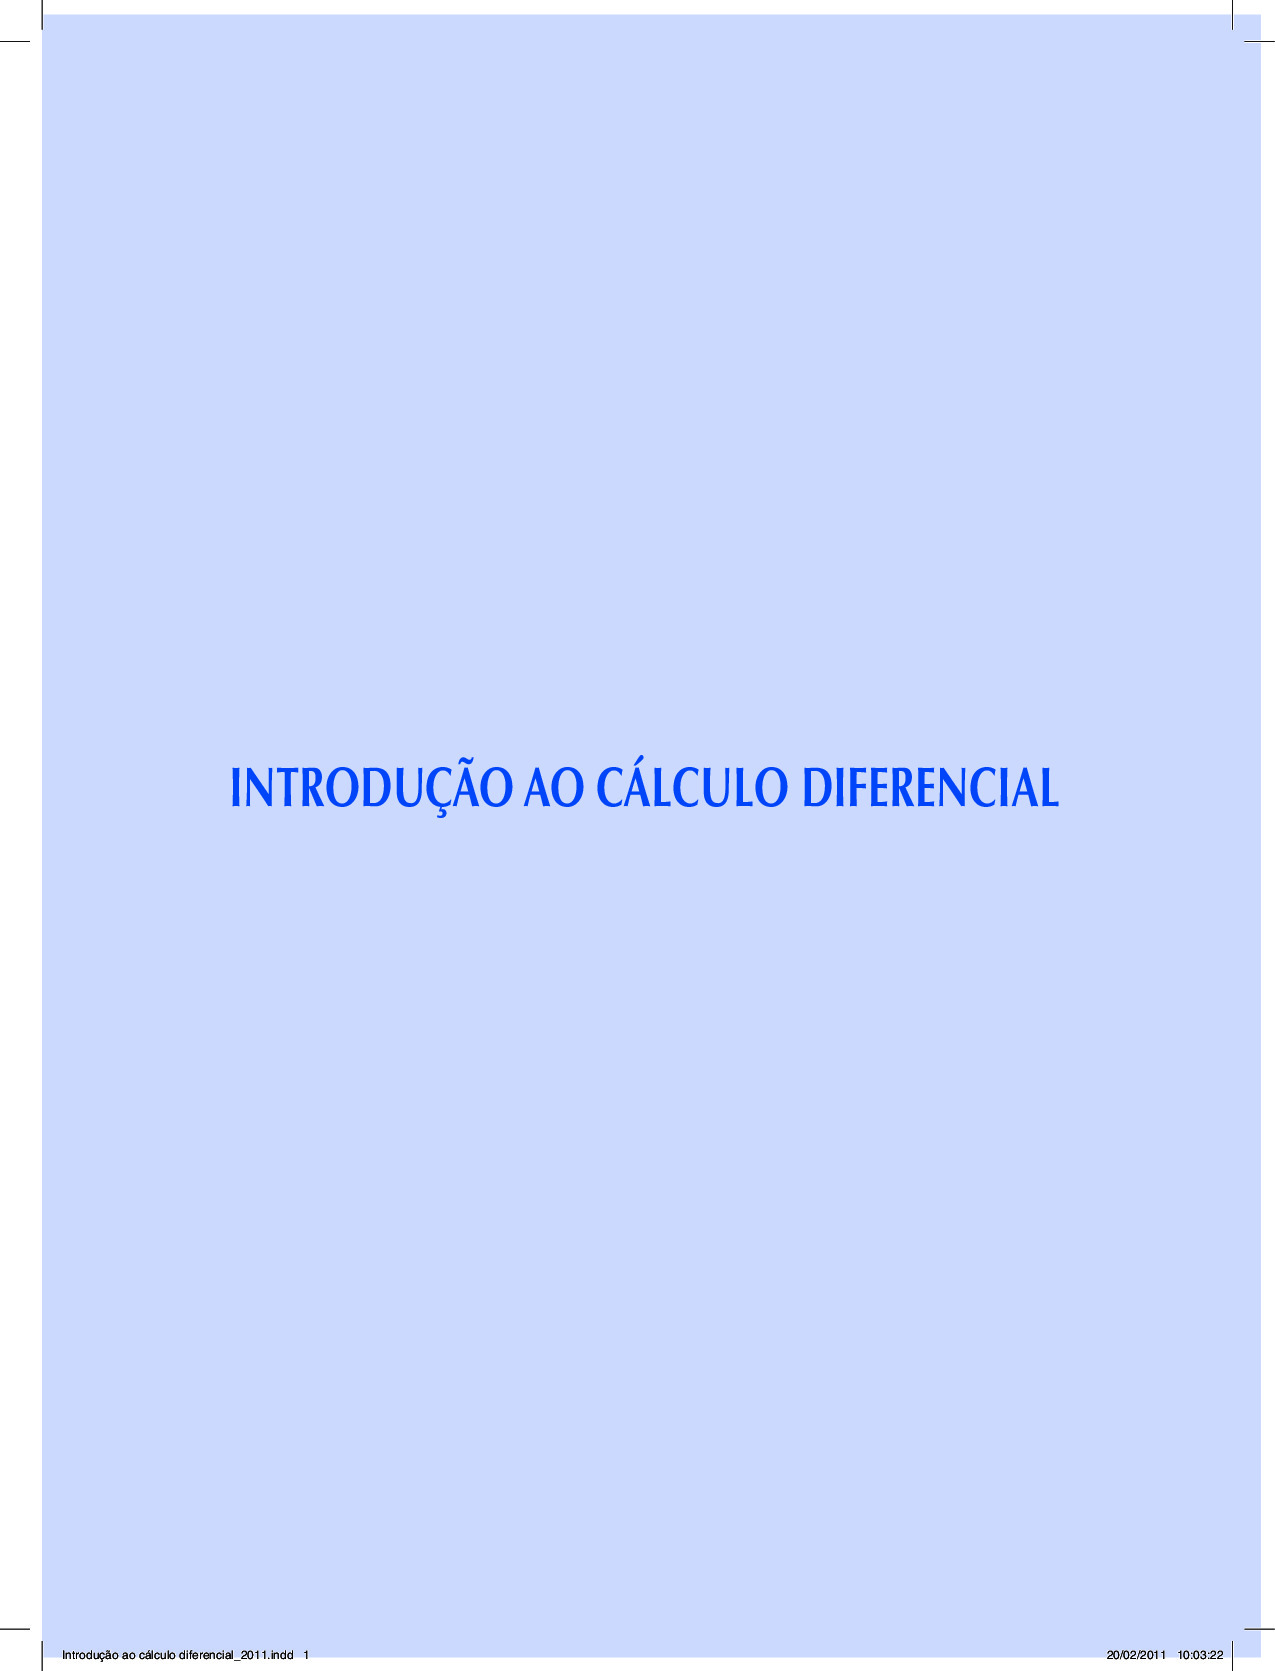 Introducao ao Calculo Diferencial